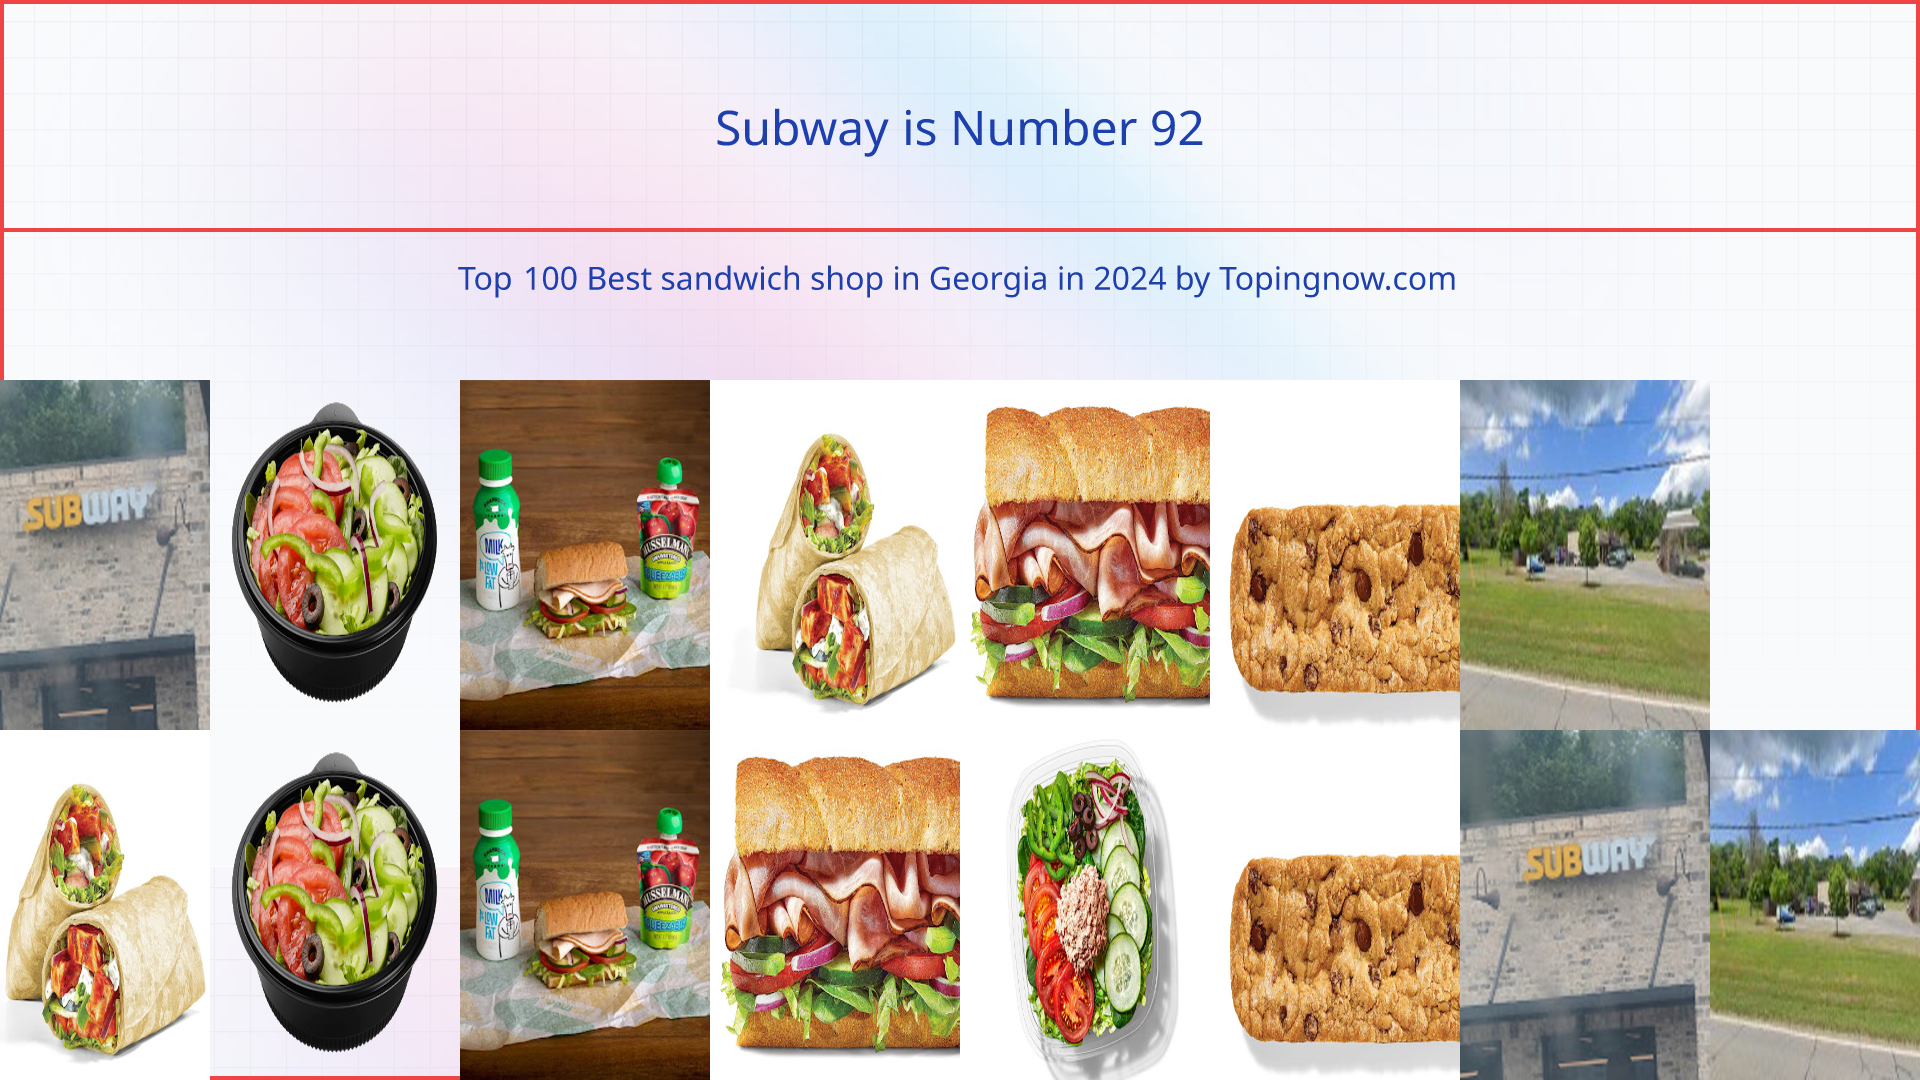 Subway: Top 100 Best sandwich shop in Georgia in 2024